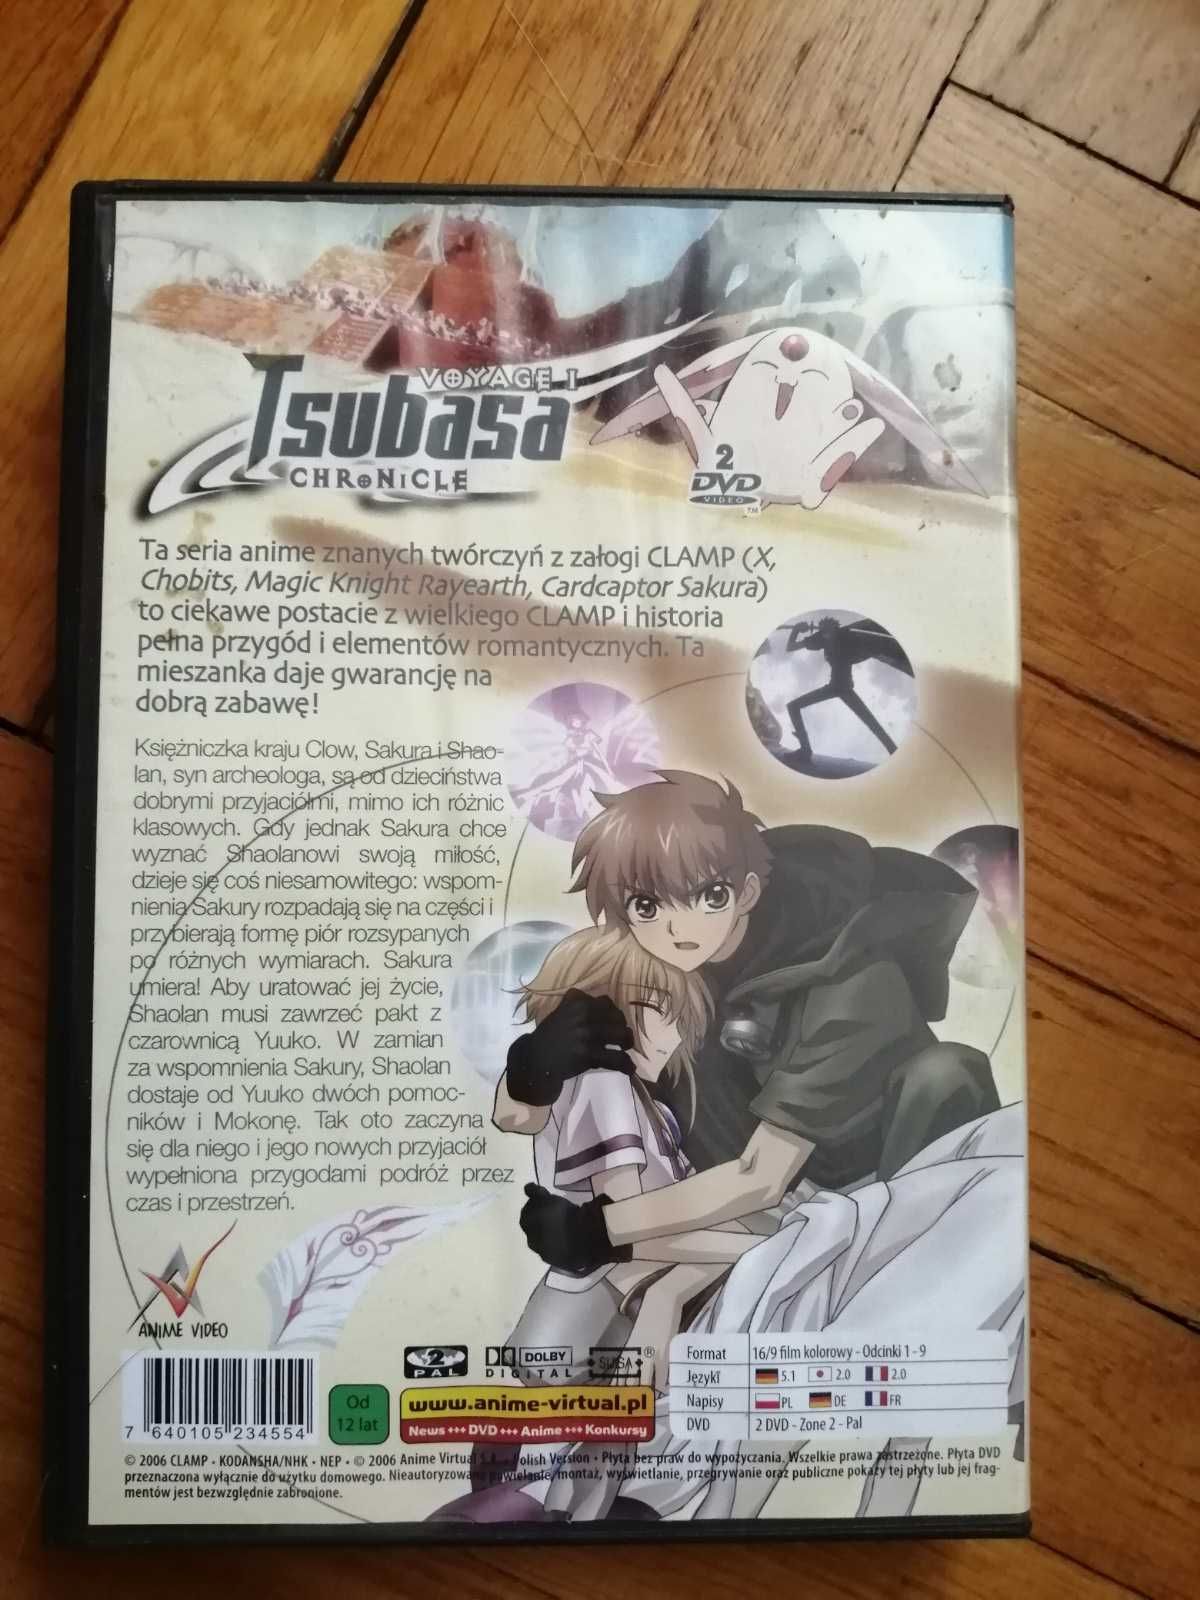 Tsubasa Chronicle. Voyage I – anime 2 dvd